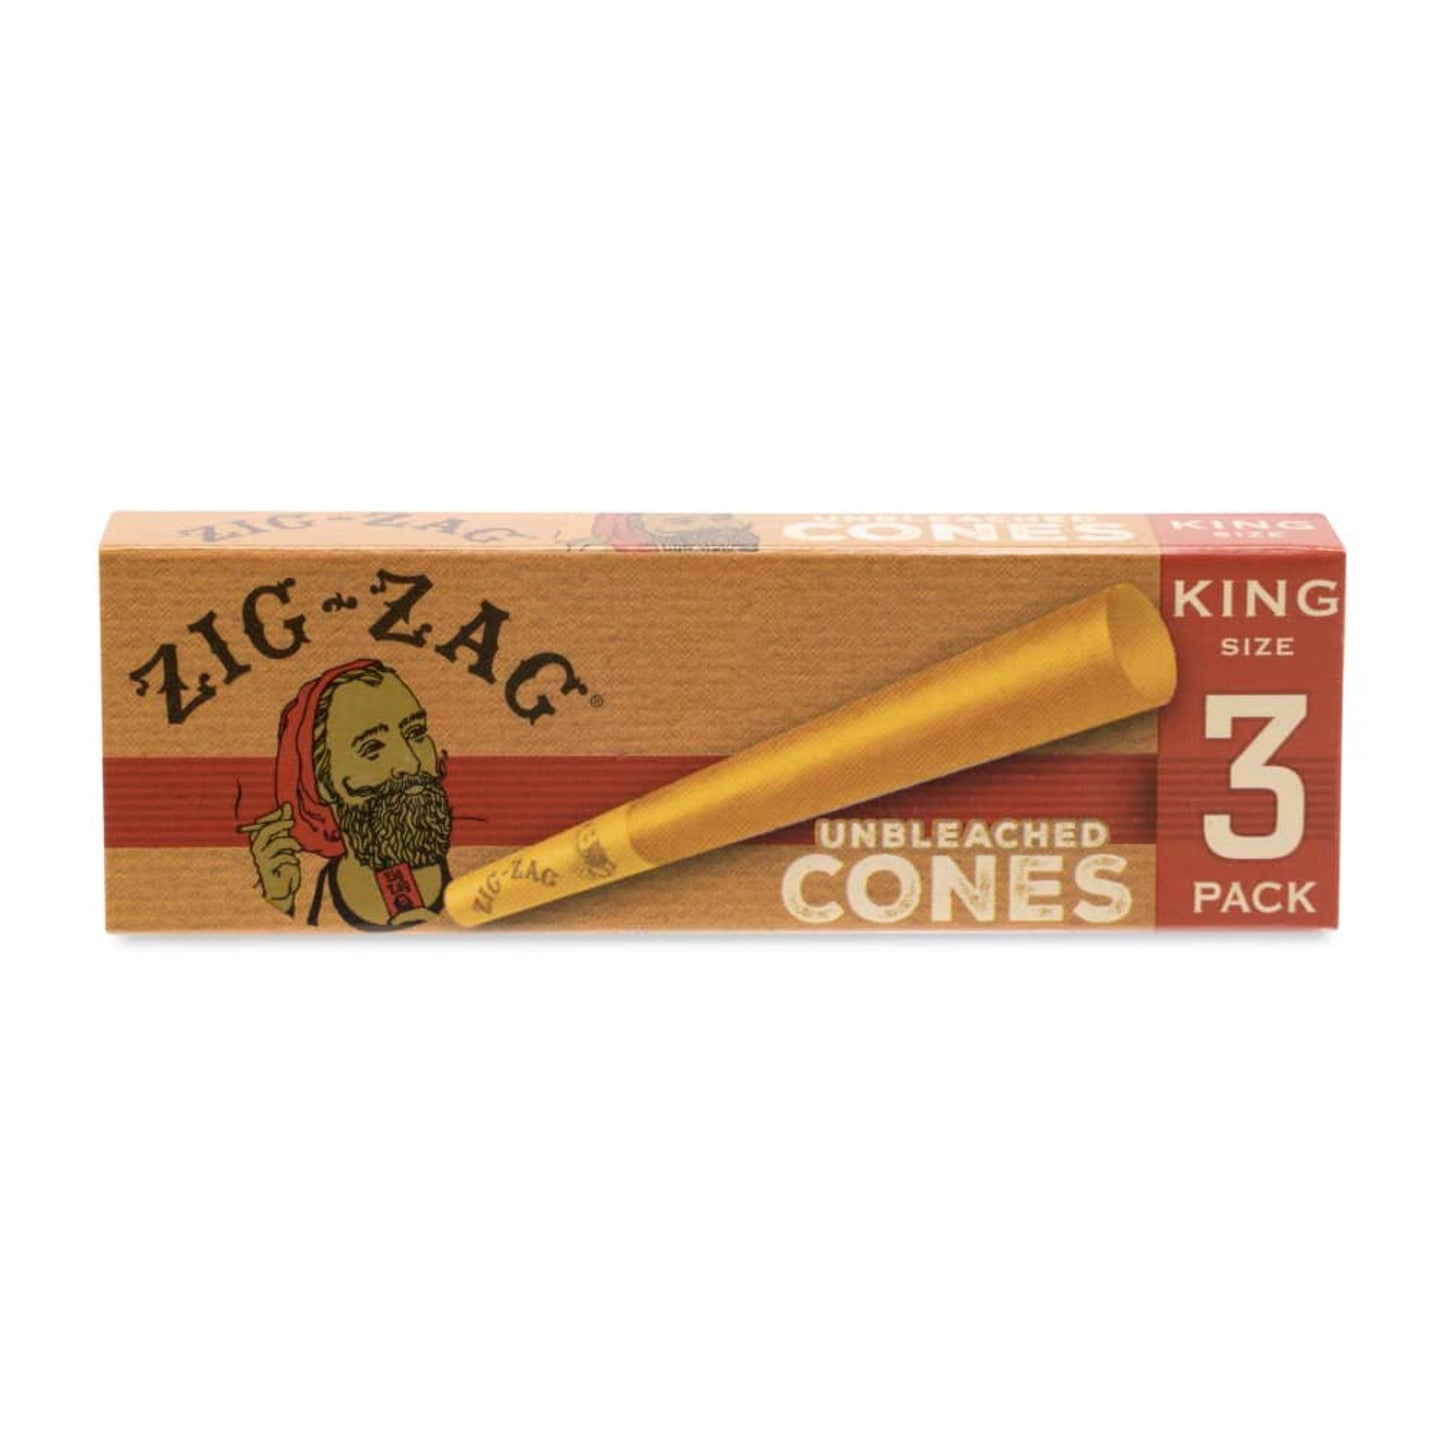 Zig Zag Cones King Size